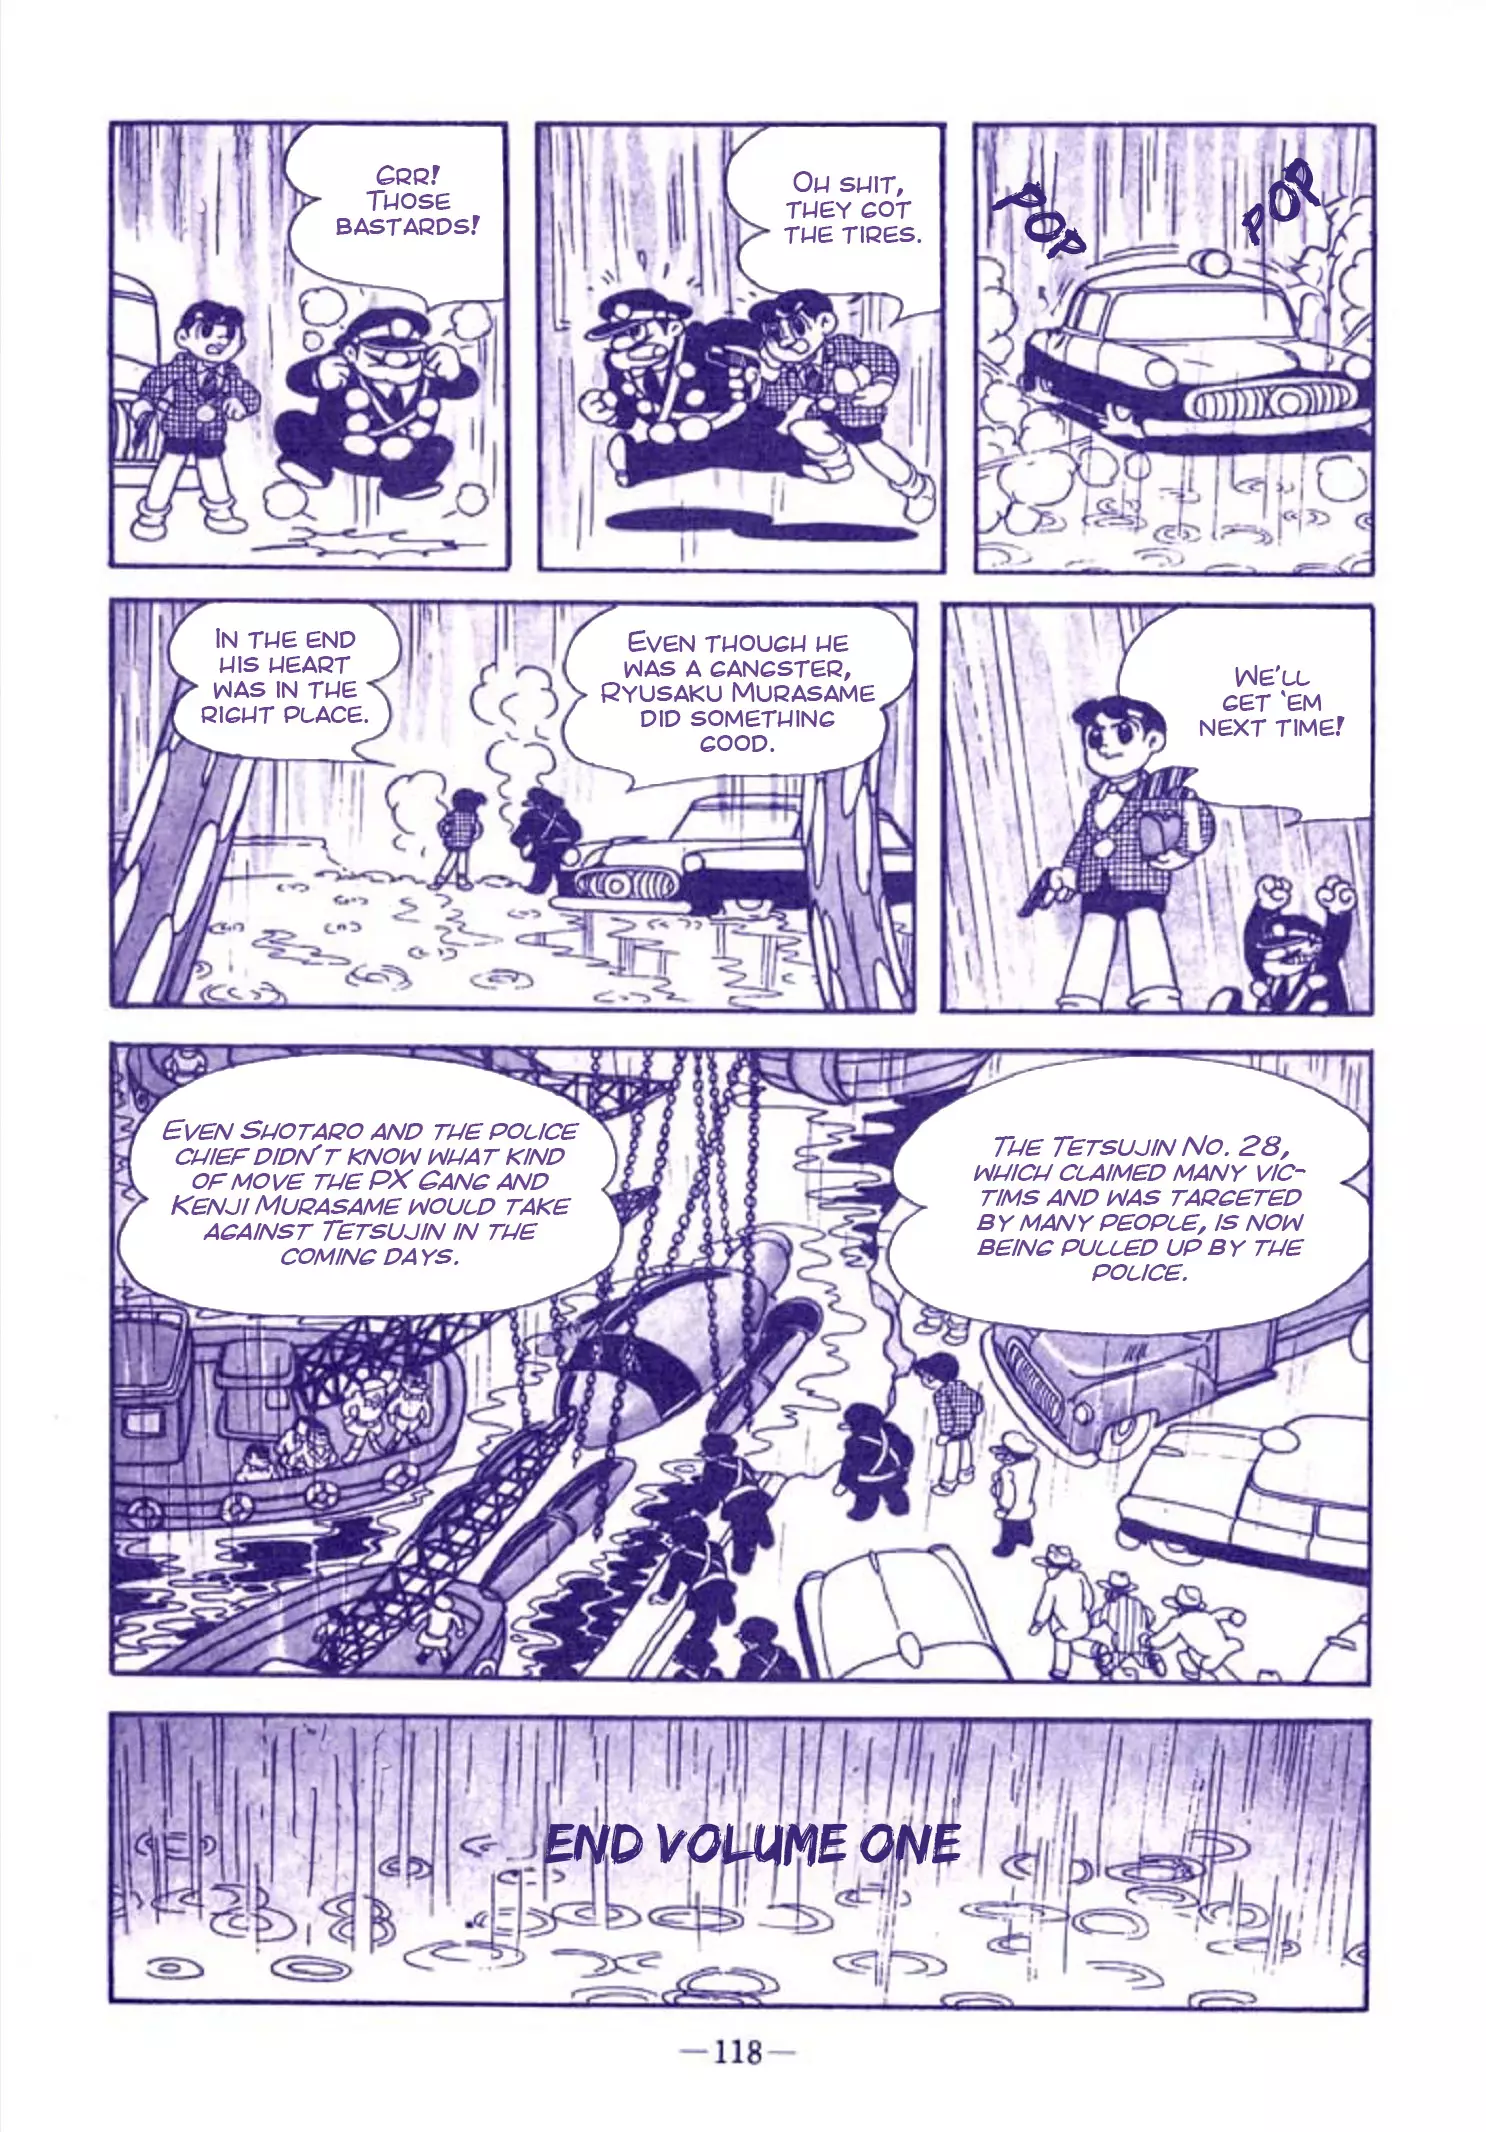 Tetsujin No. 28 Full Length Detective Manga - 1 page 121-645c3bca